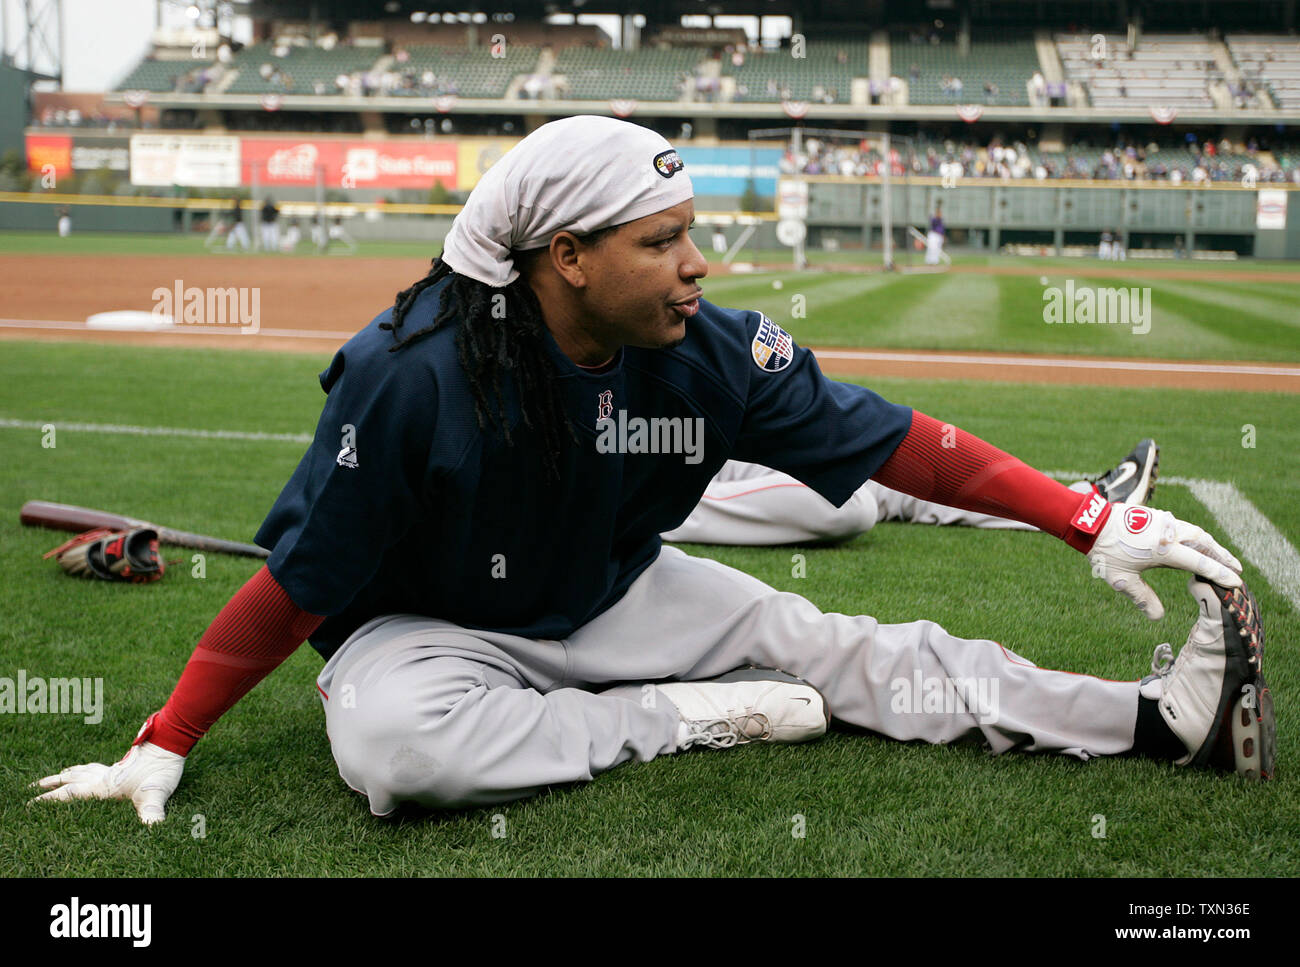 Boston Red Sox left fielder Manny Ramirez stretches before batting